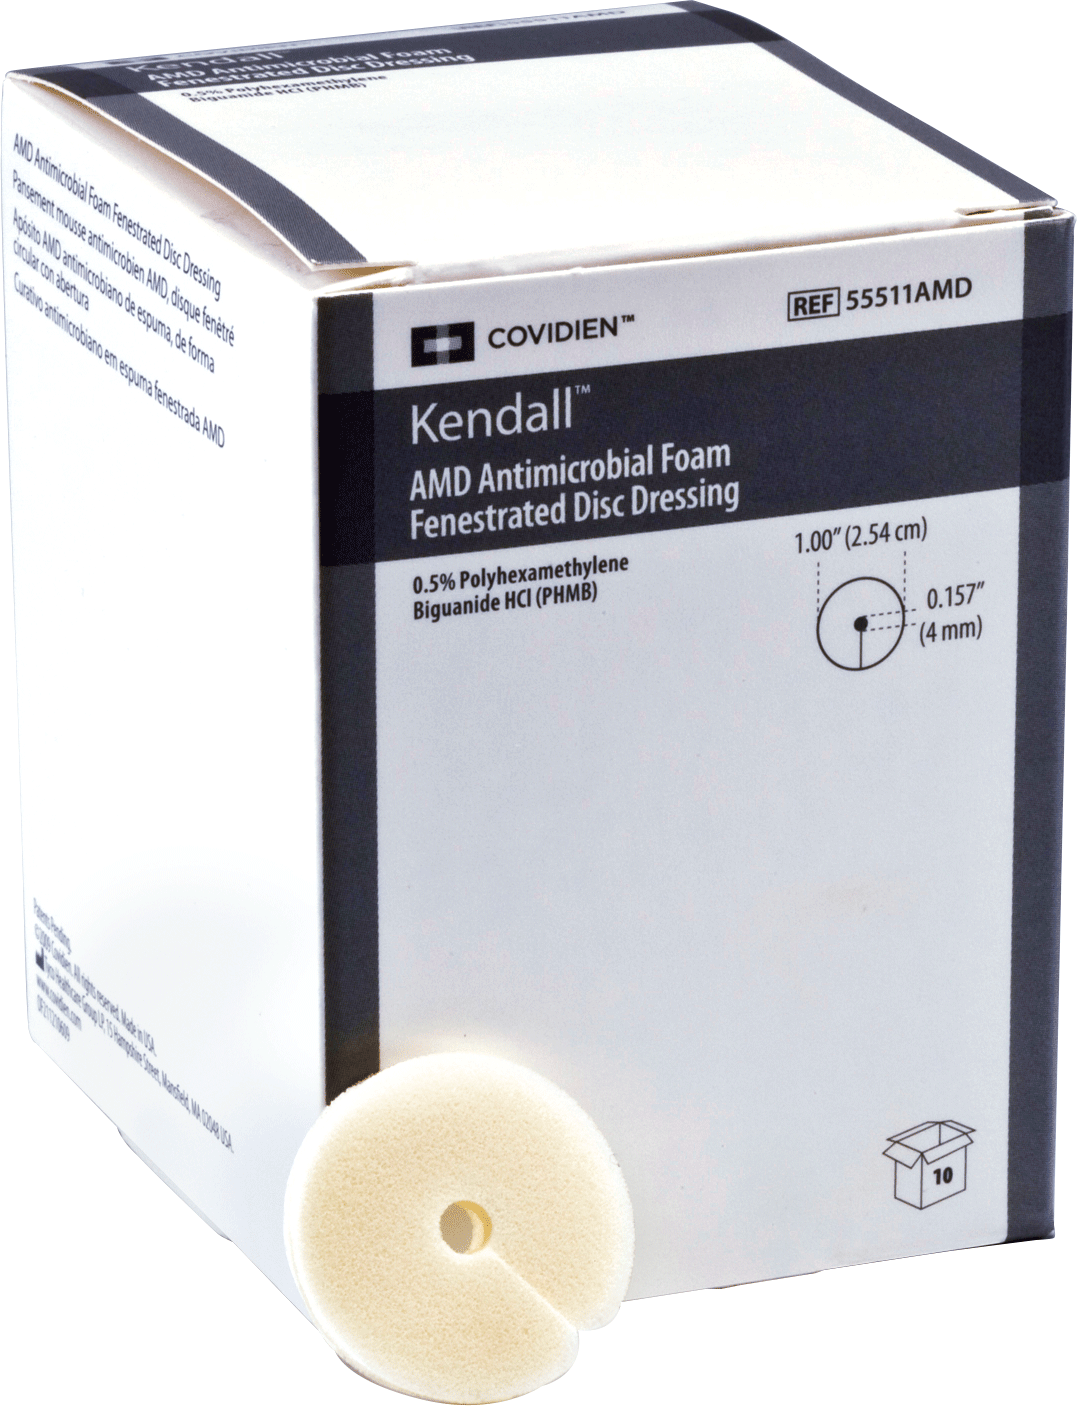 BX/10 - Cardinal Health Kendall AMD Antimicrobial Foam Discs, 1" Diameter, 4 mm Hole - Best Buy Medical Supplies